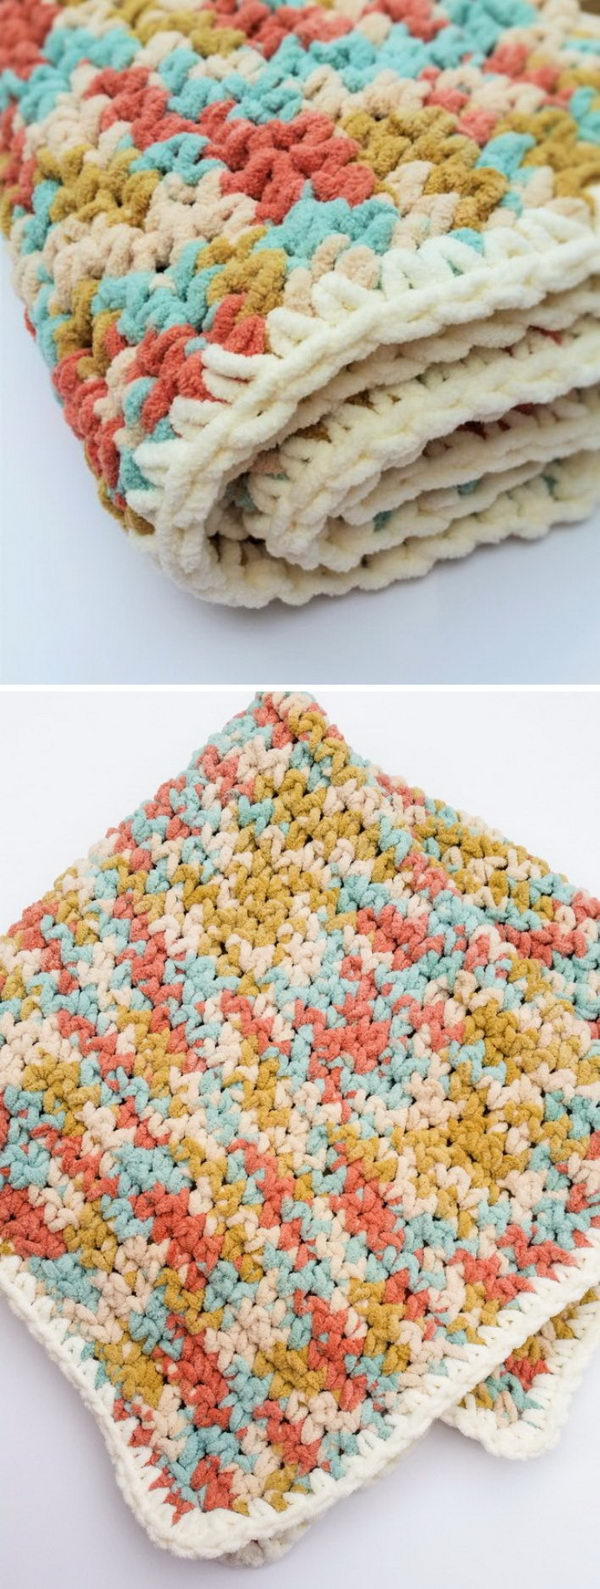 Free Baby Crochet Baby Blanket Patterns 30 Free Crochet Patterns For Blankets Hative